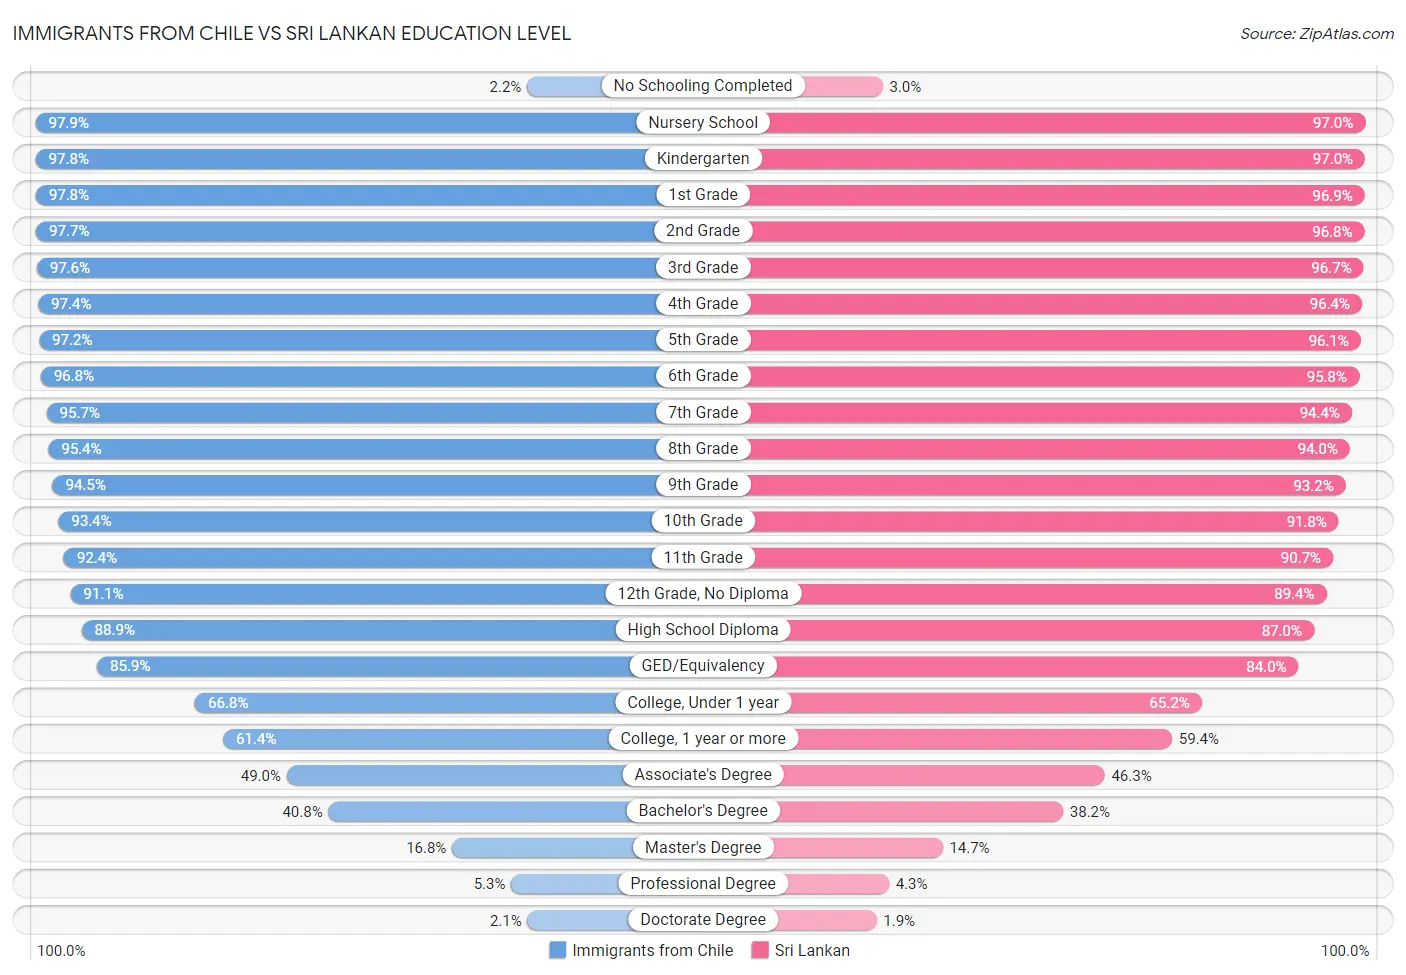 Immigrants from Chile vs Sri Lankan Education Level